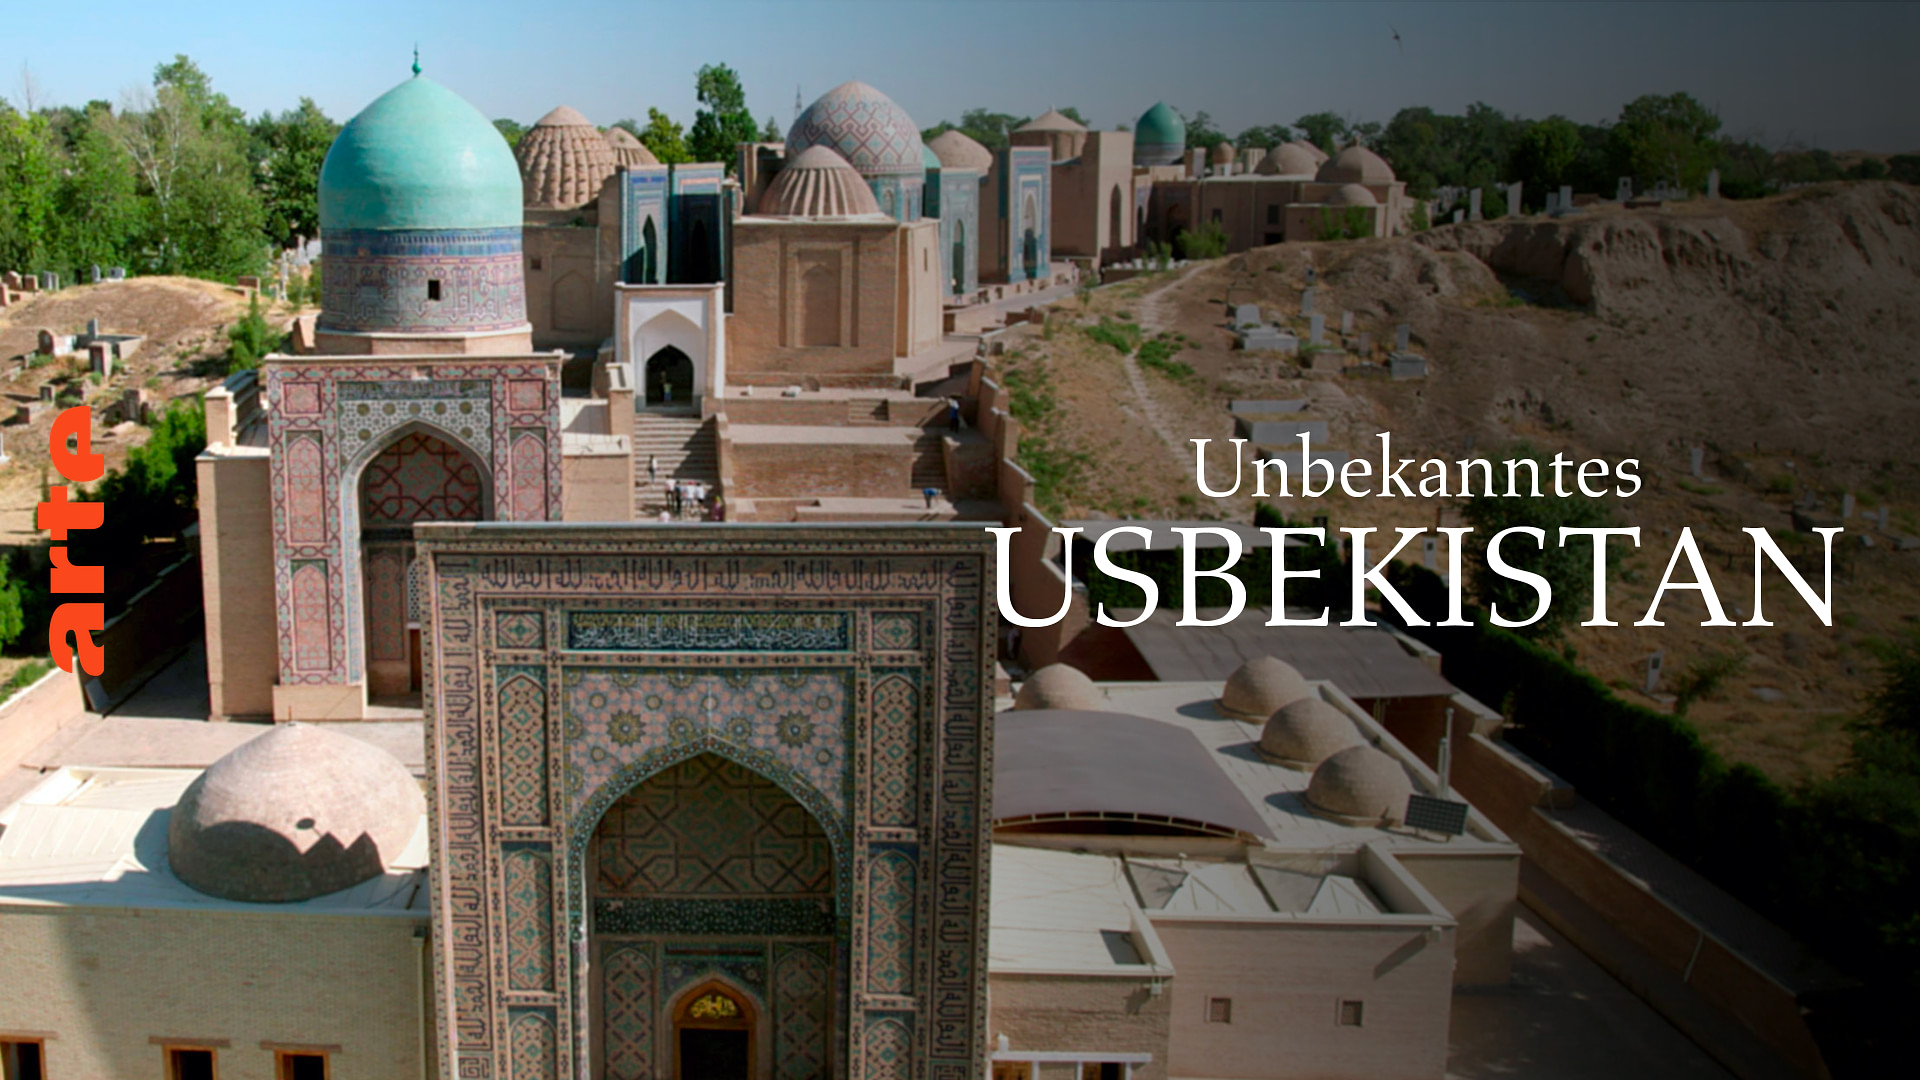 Unbekanntes Usbekistan